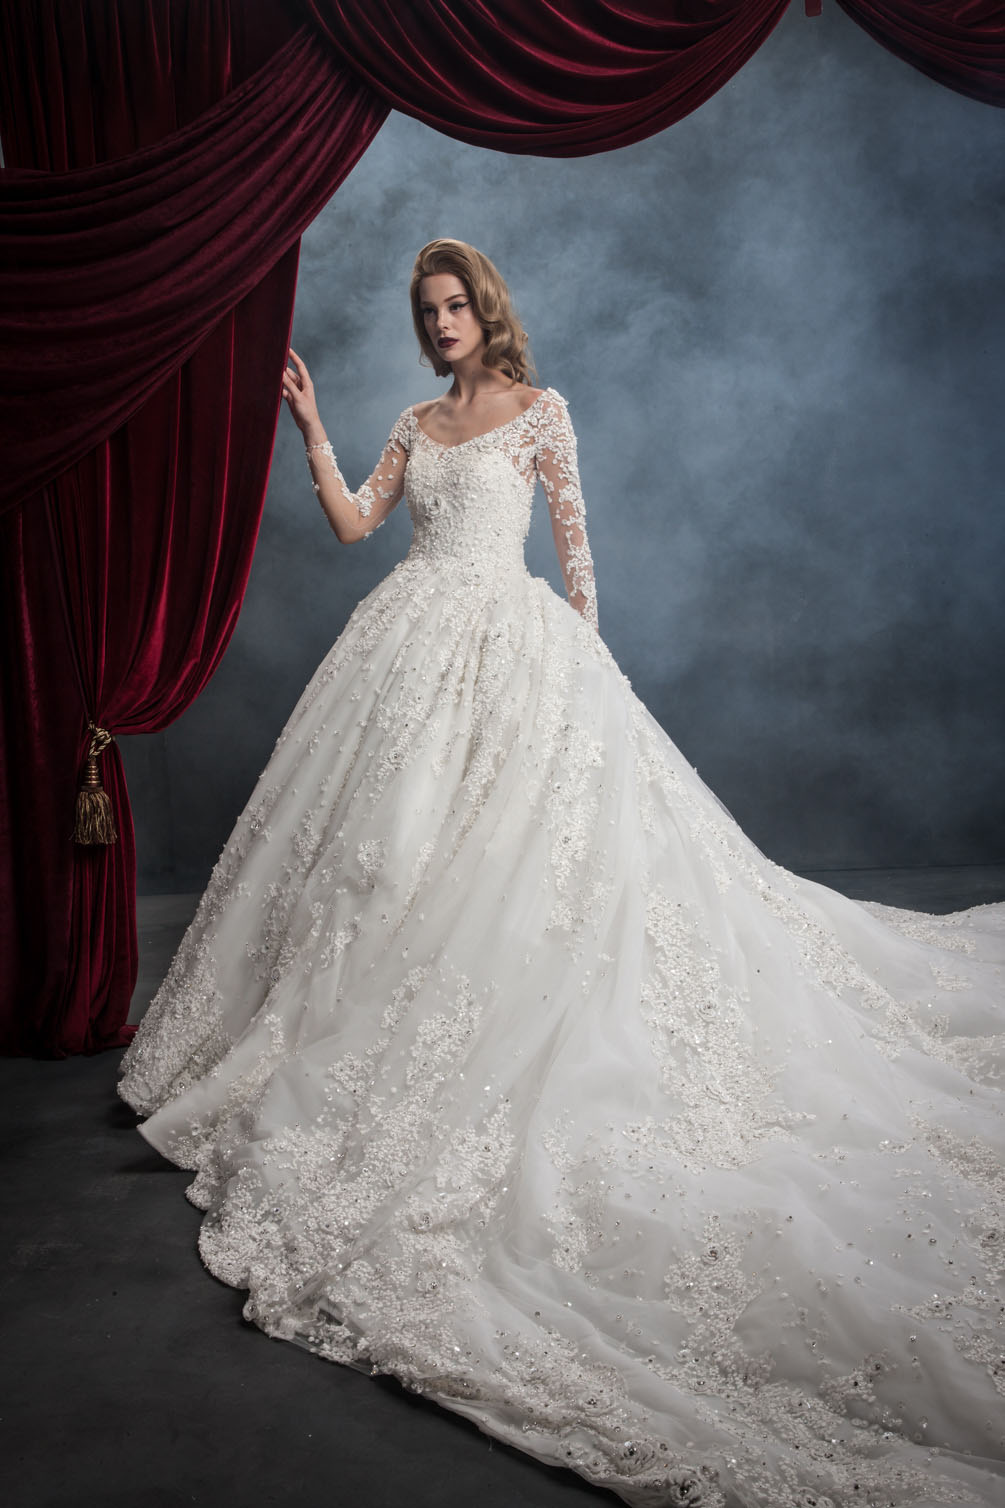 fashion atelier by darsara DAR SARA 35305 Stunning bridal and wedding dresses available for rental in Dubai, UAE